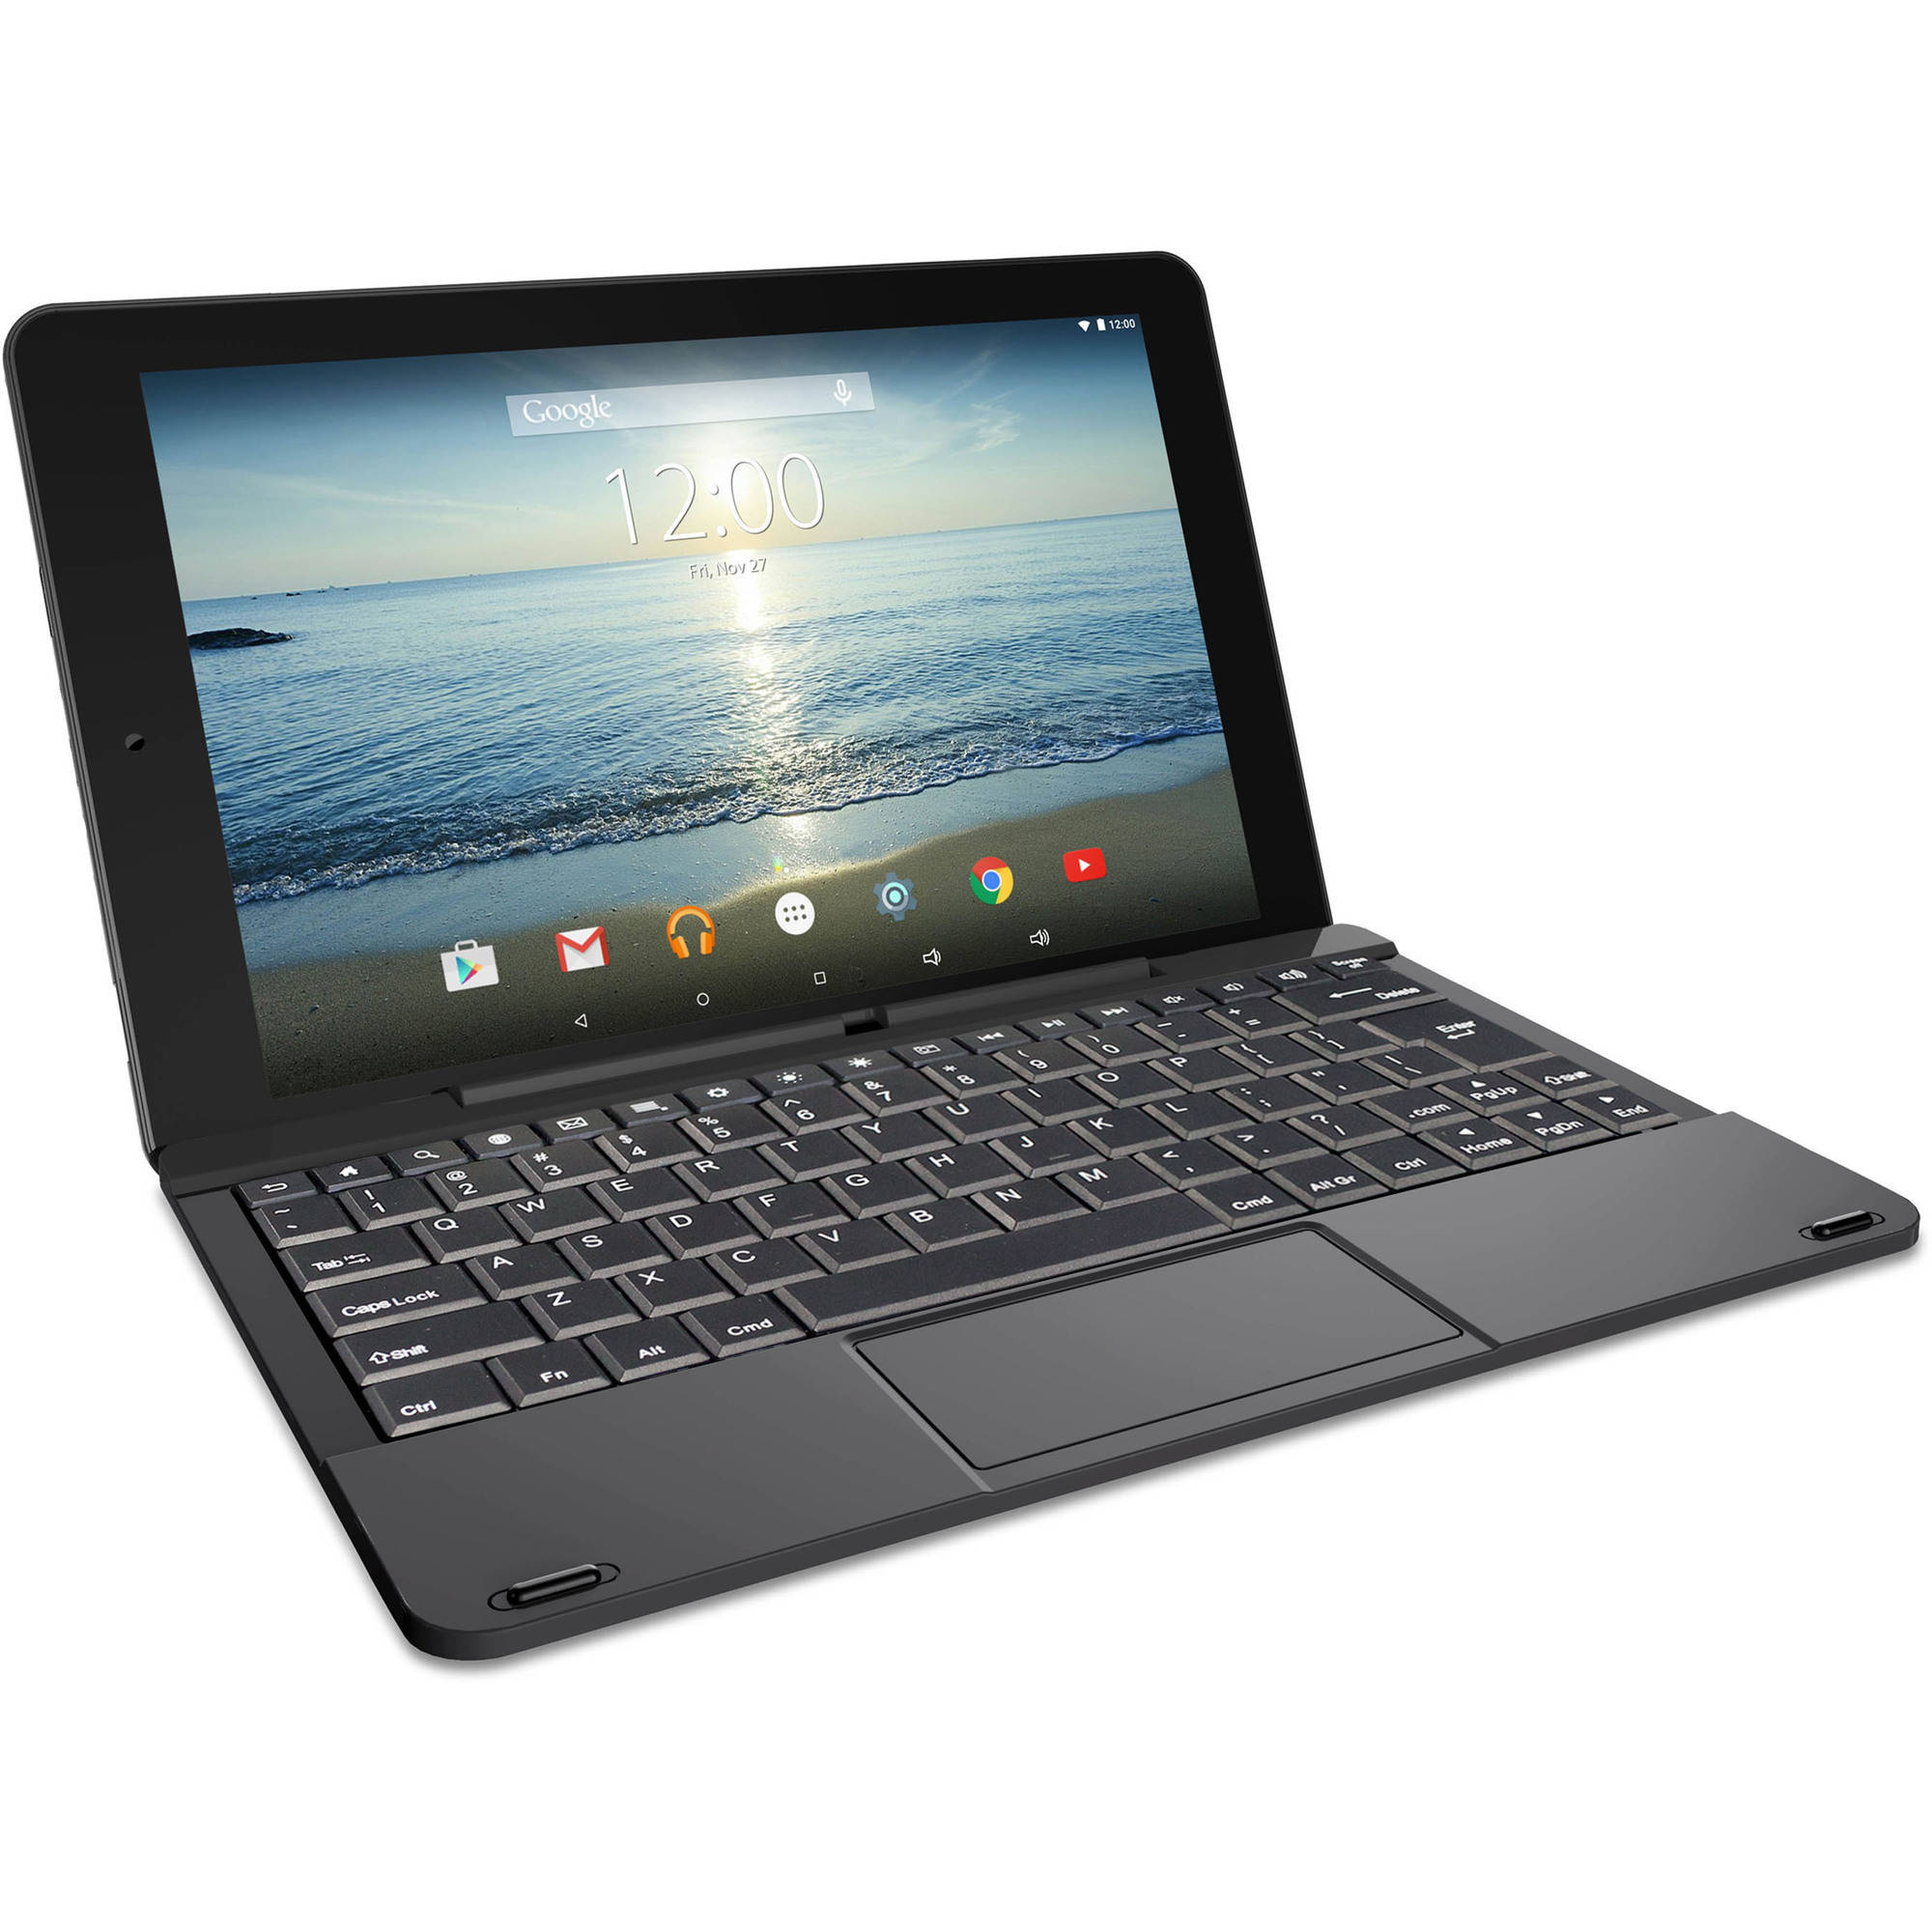 Windows 10 tablet detachable keyboard